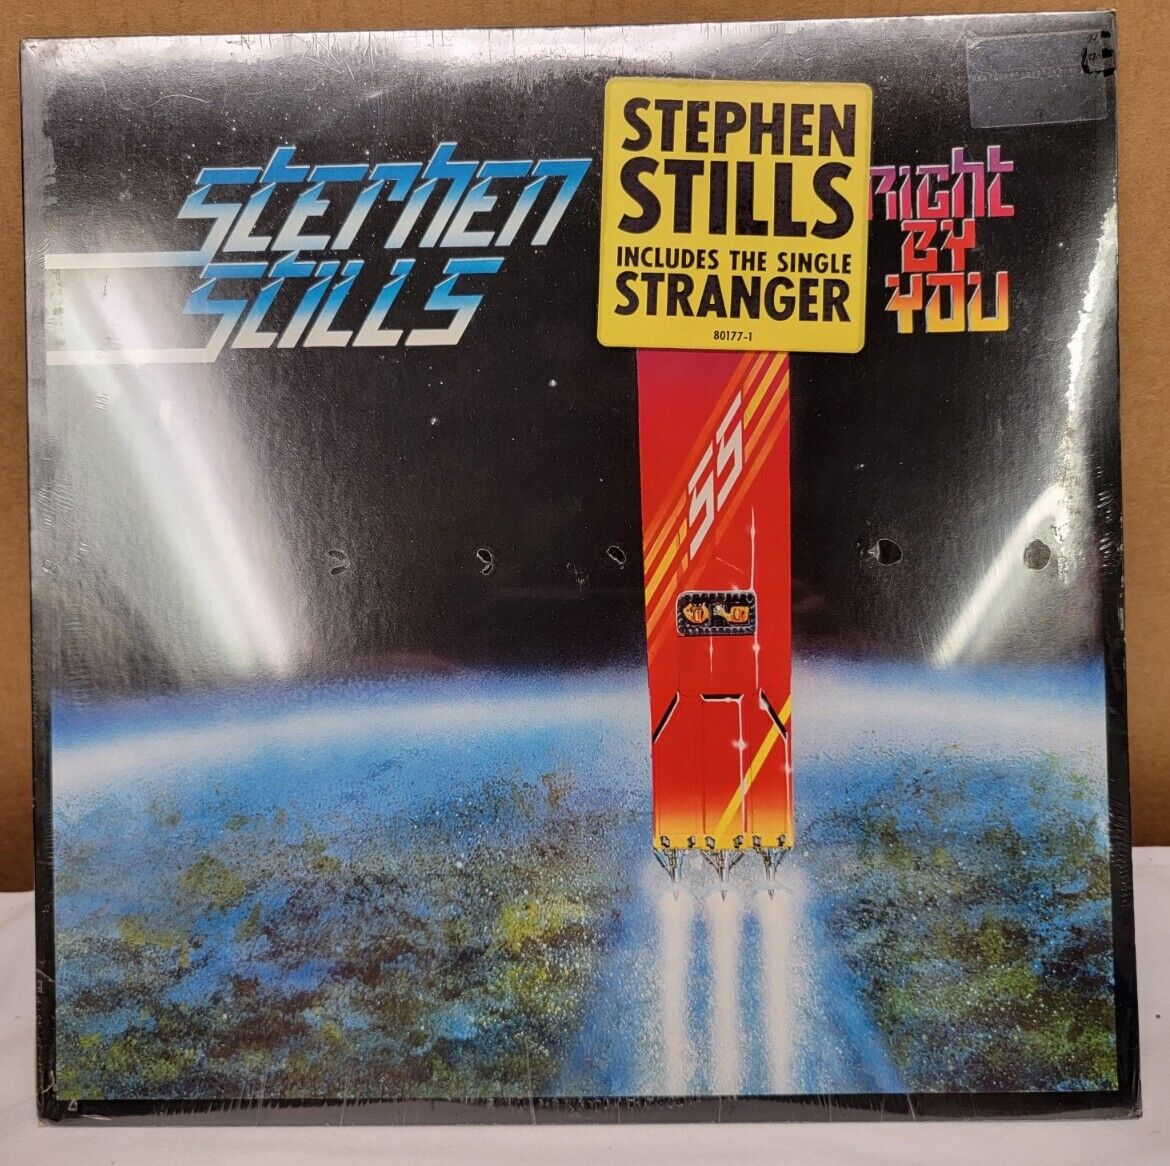 SEALED! Original 1984 Stephen Stills “Right by You” LP - Atlantic Records - MINT